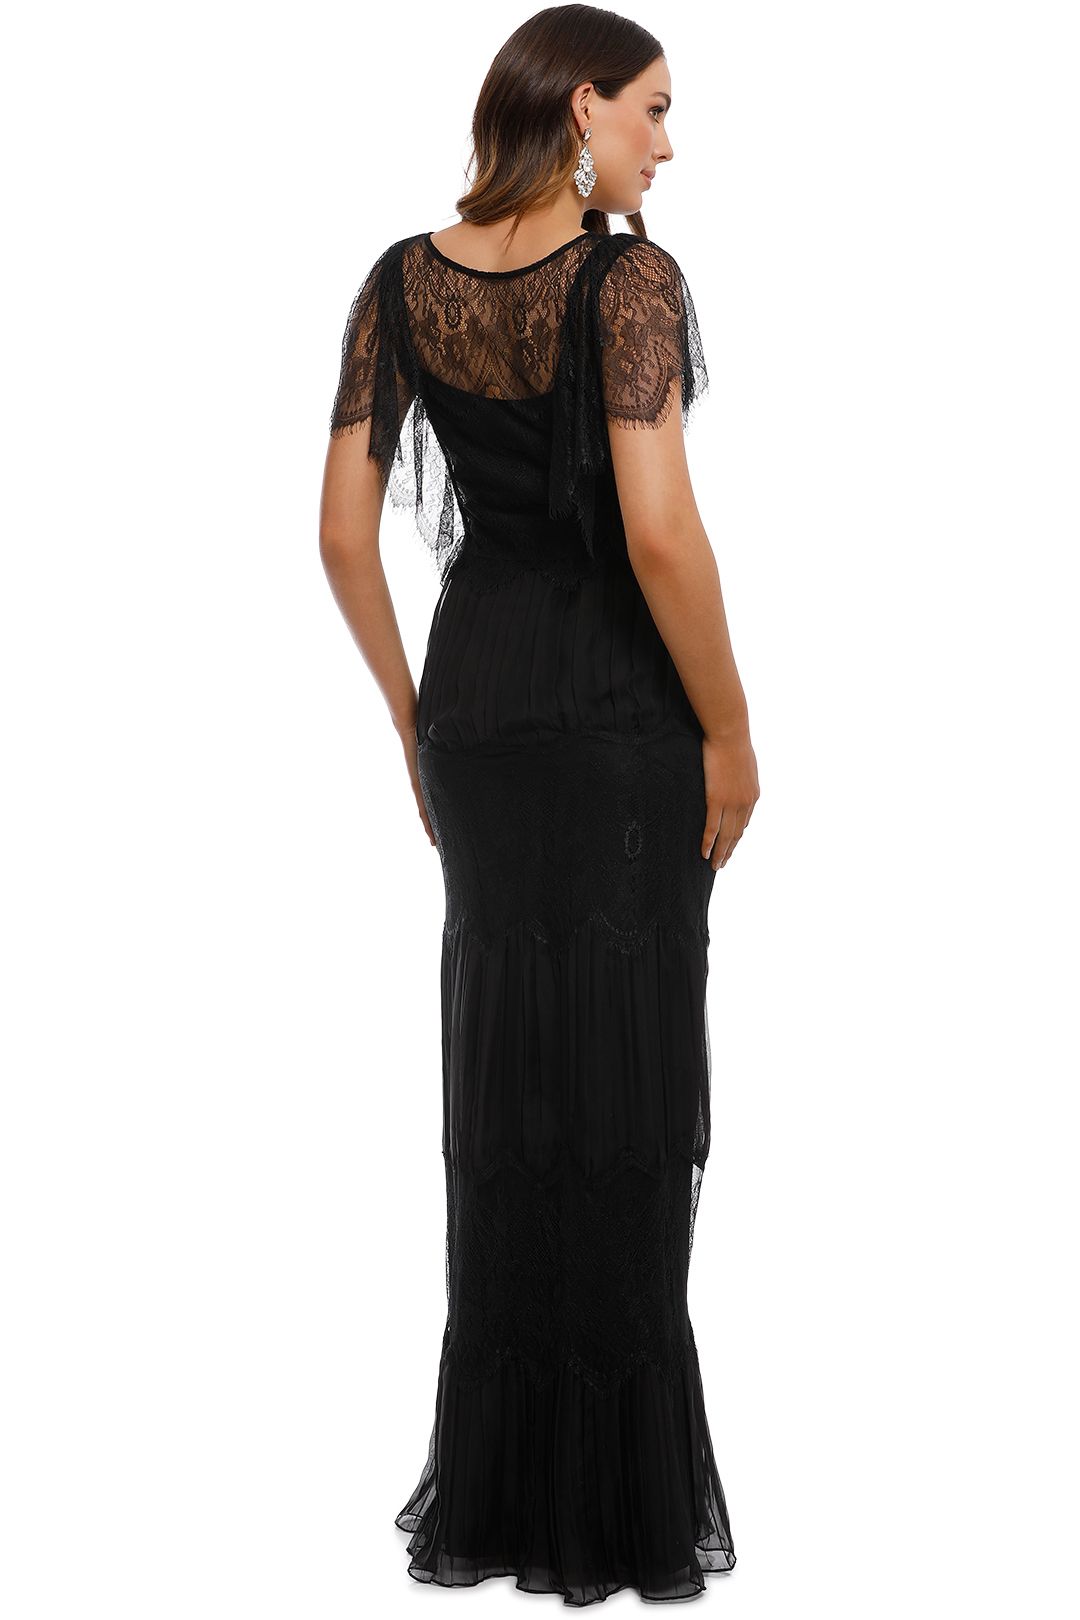 Tania Olsen - Clara Evening Gown - Black - Back